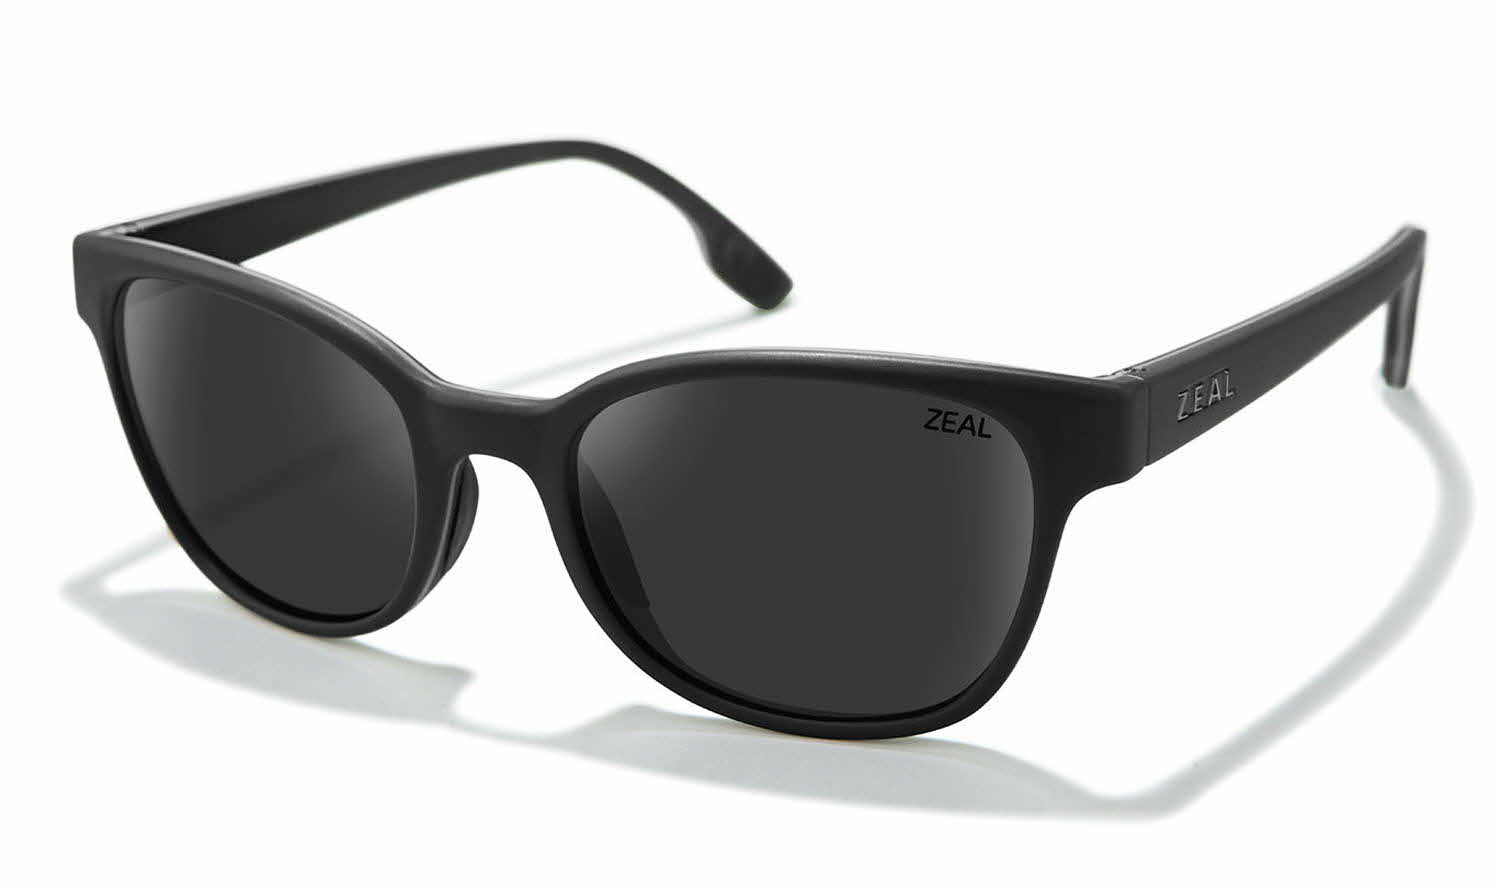 Zeal Optics Avon Sunglasses